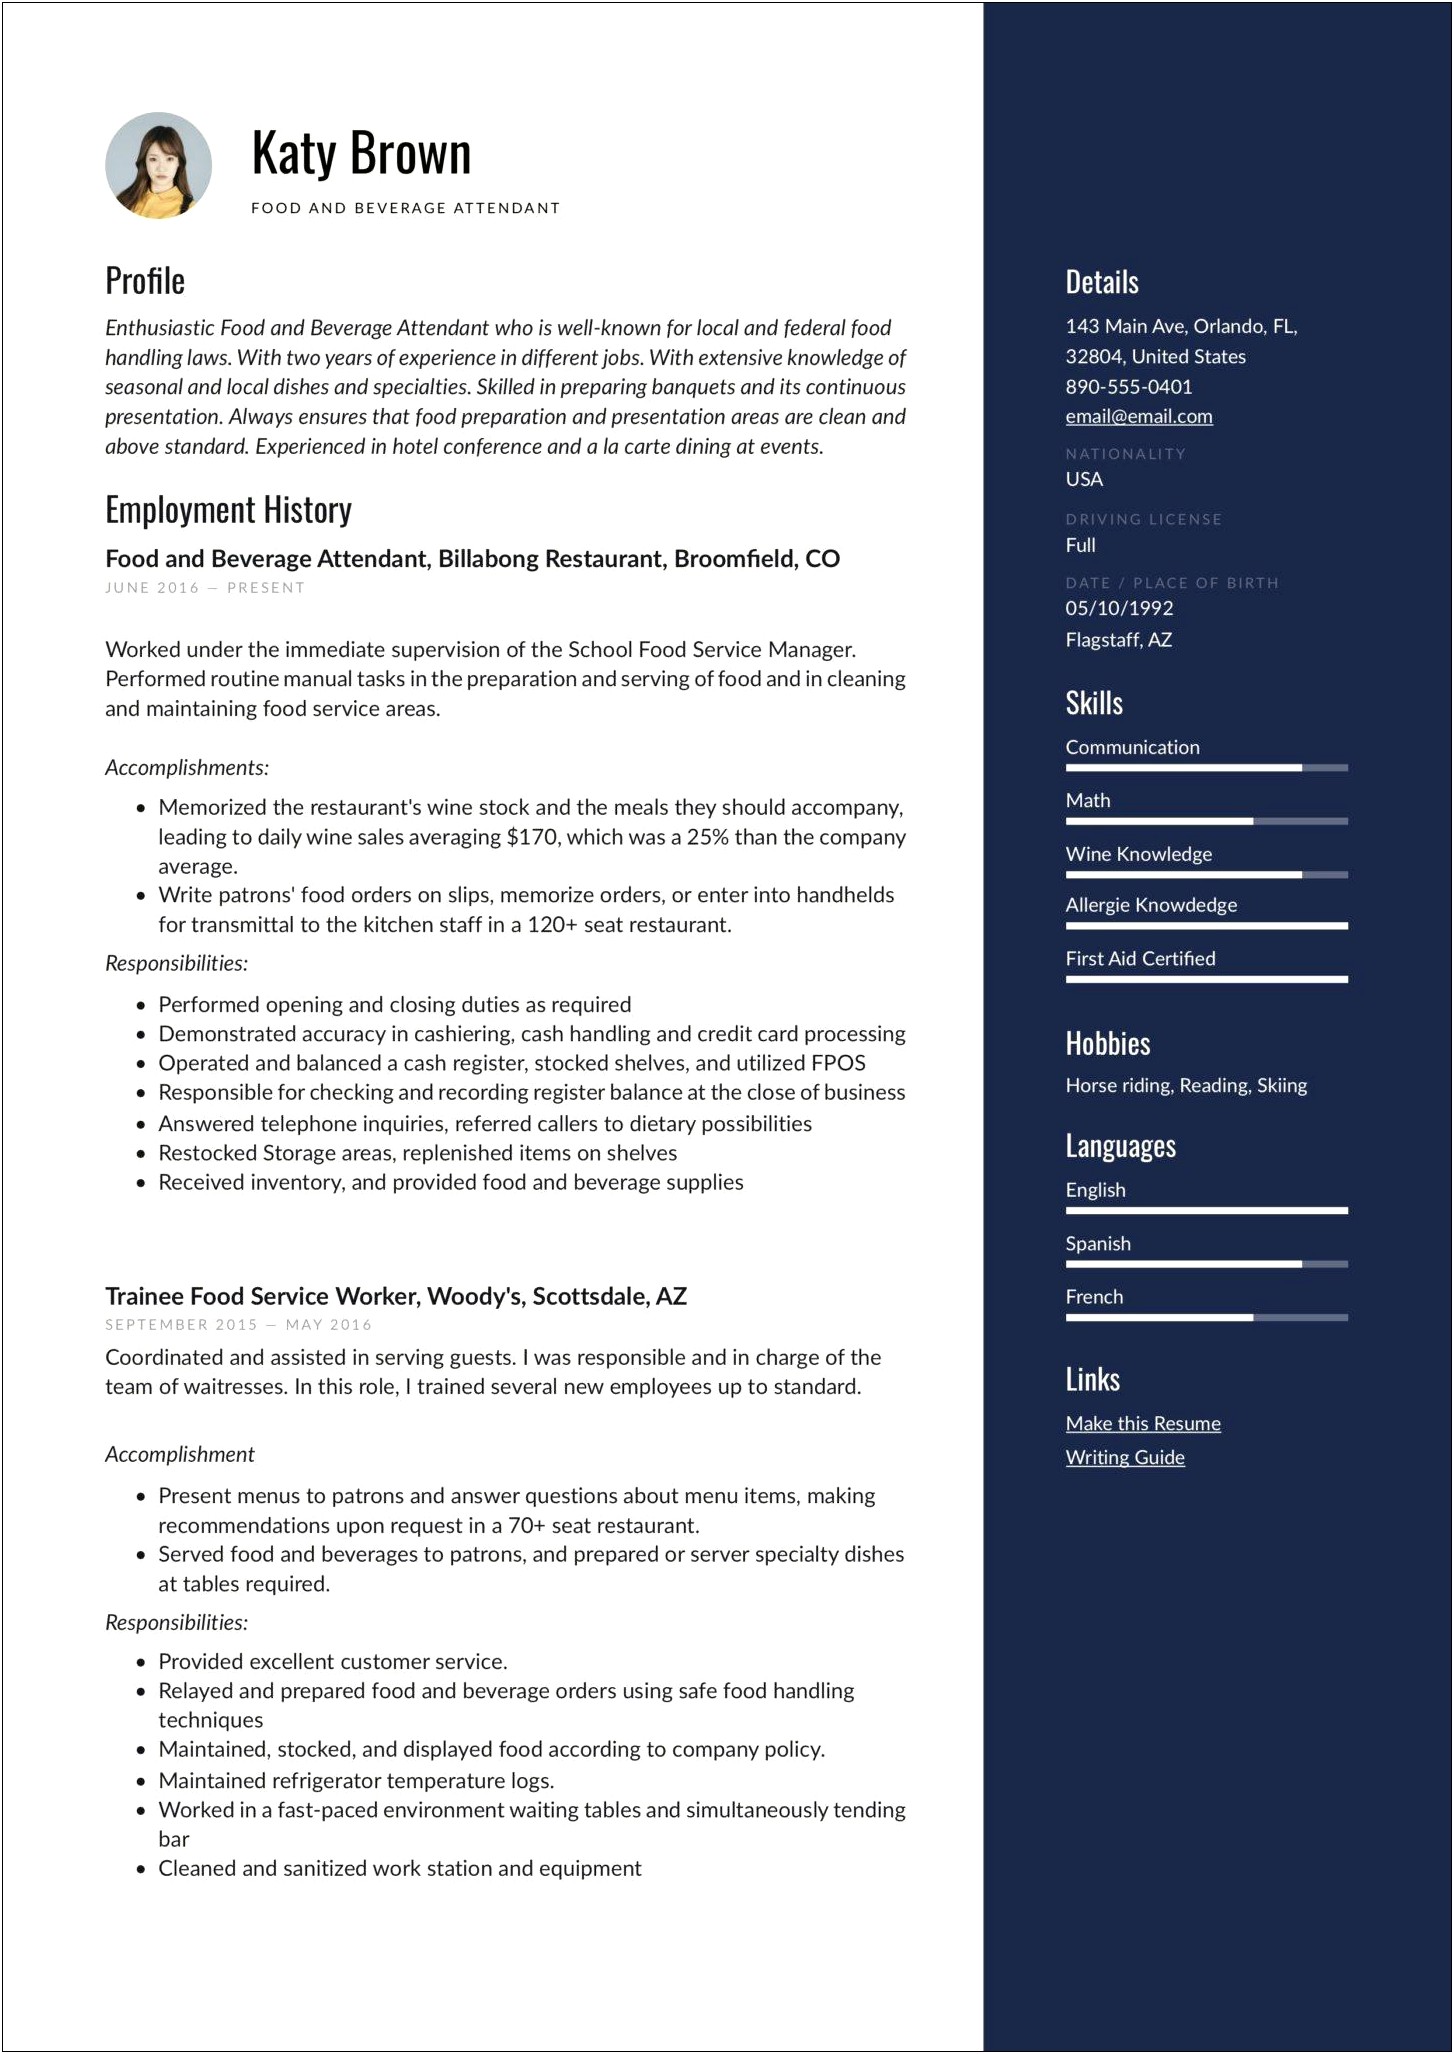 Resume Format For Part Time Jobs In Australia